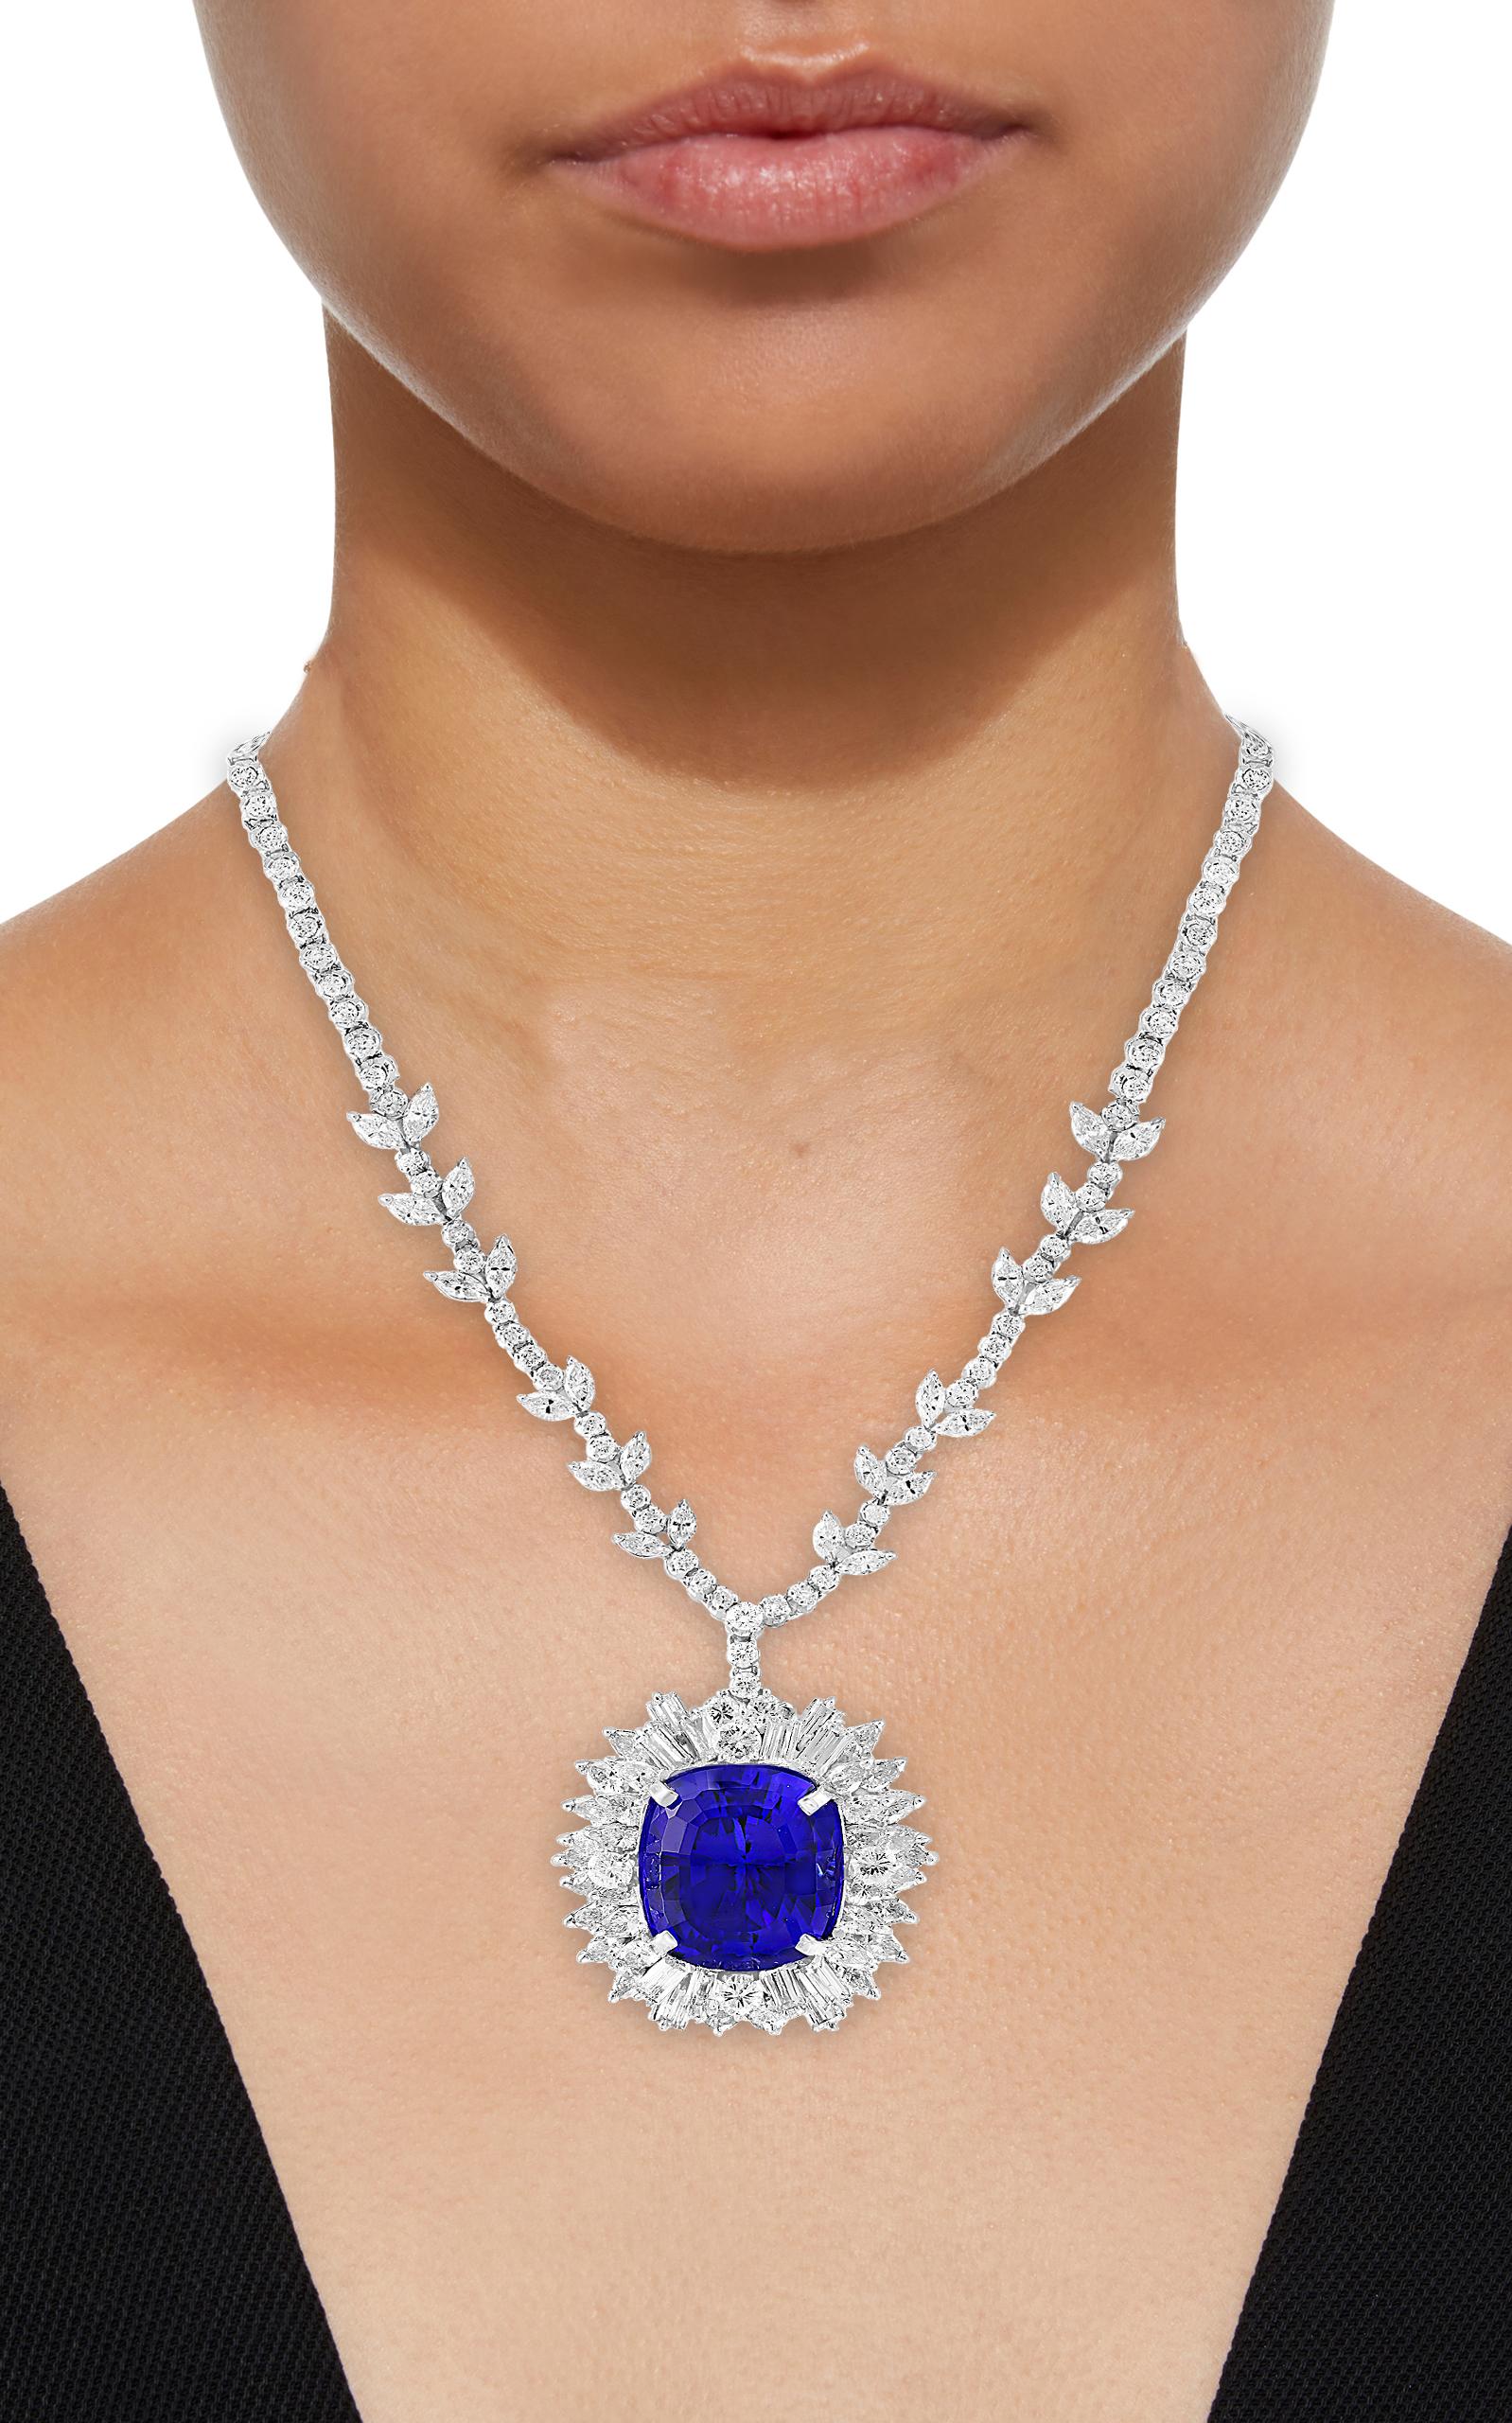 Women's 43 Carat Cushion-Cut Tanzanite Pendant Necklace with 18 Carat Diamonds, Estate For Sale